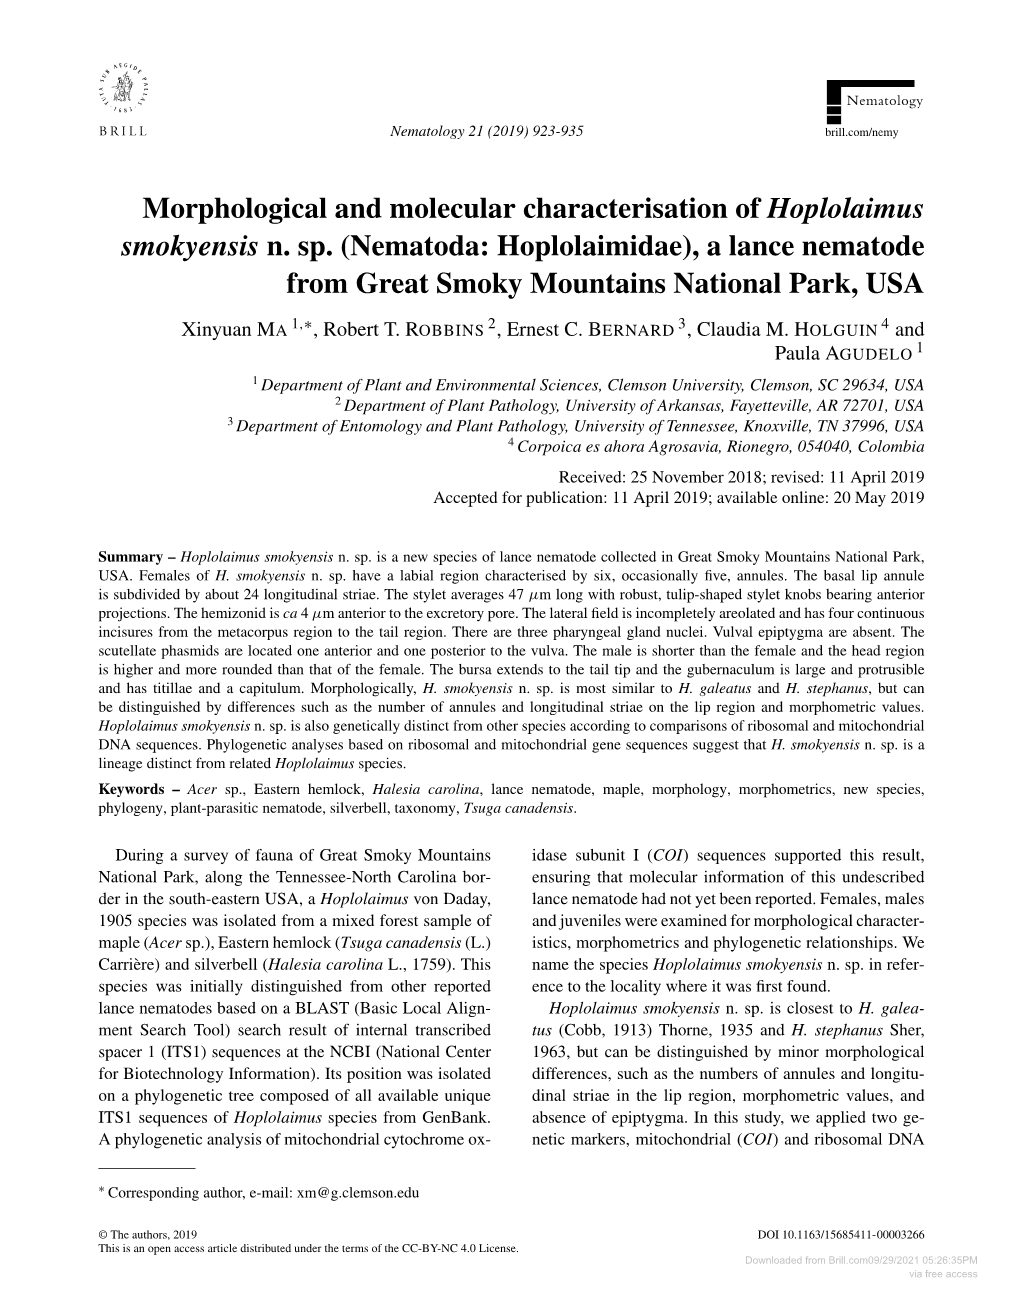 Morphological and Molecular Characterisation of Hoplolaimus Smokyensis N